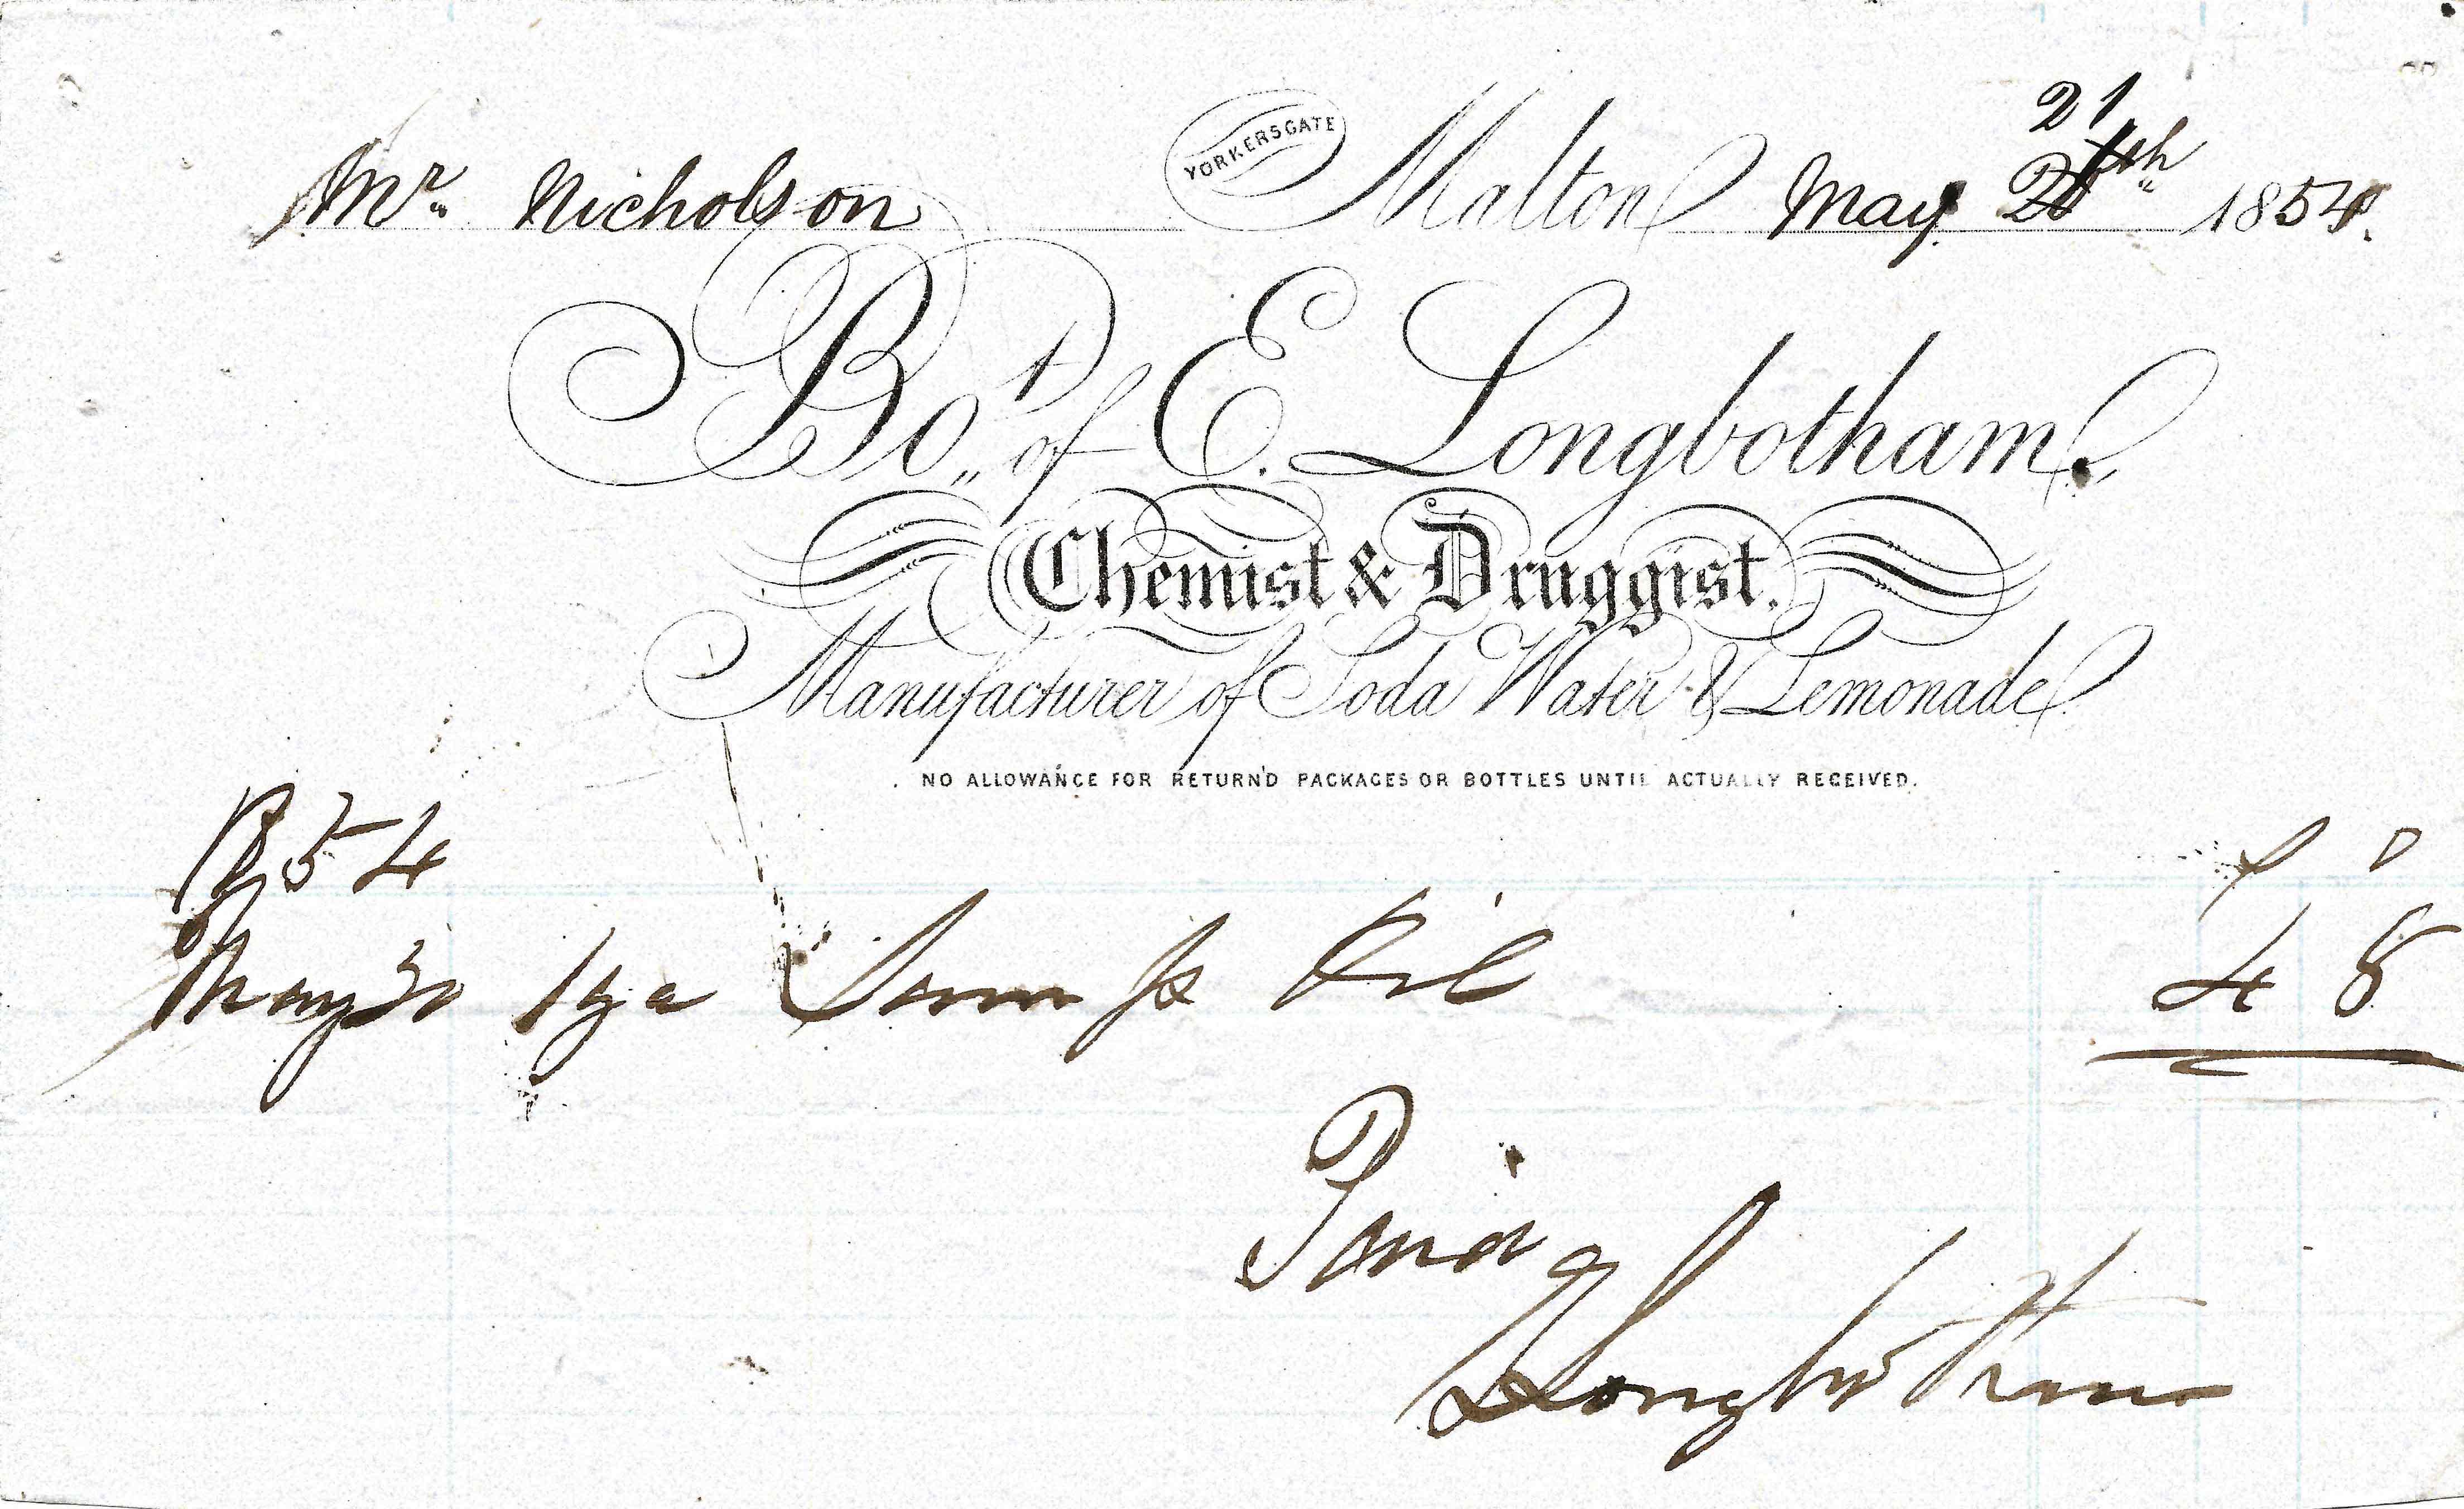 Edward Longbotham, chemist & druggist, receipt